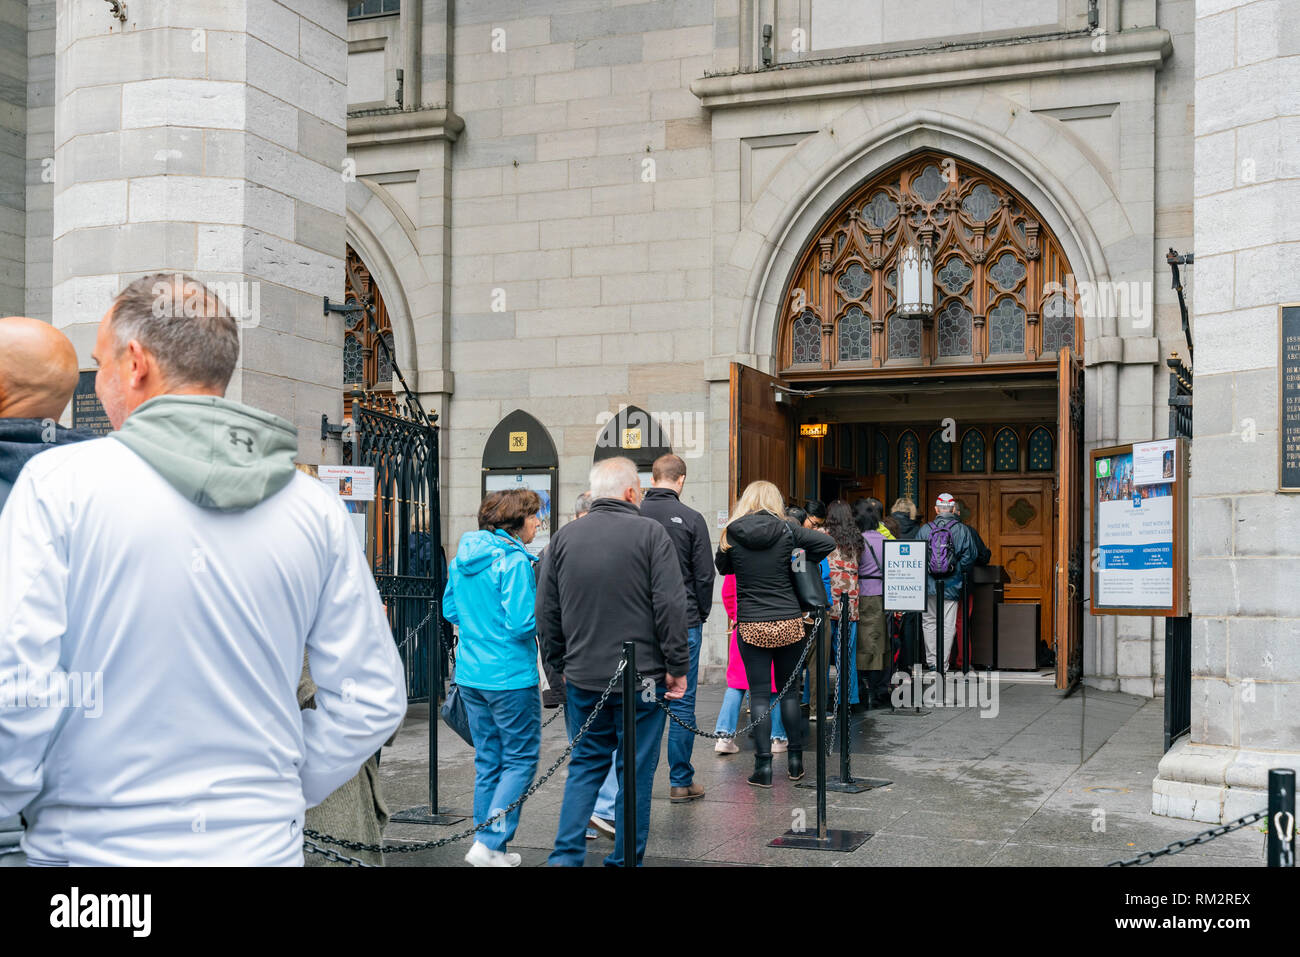 Quebec, OKT 2: Menschen wartete, im berühmten Basilique notre-dame De Montreal am Okt 2, 2018 in Quebec, Kanada Stockfoto